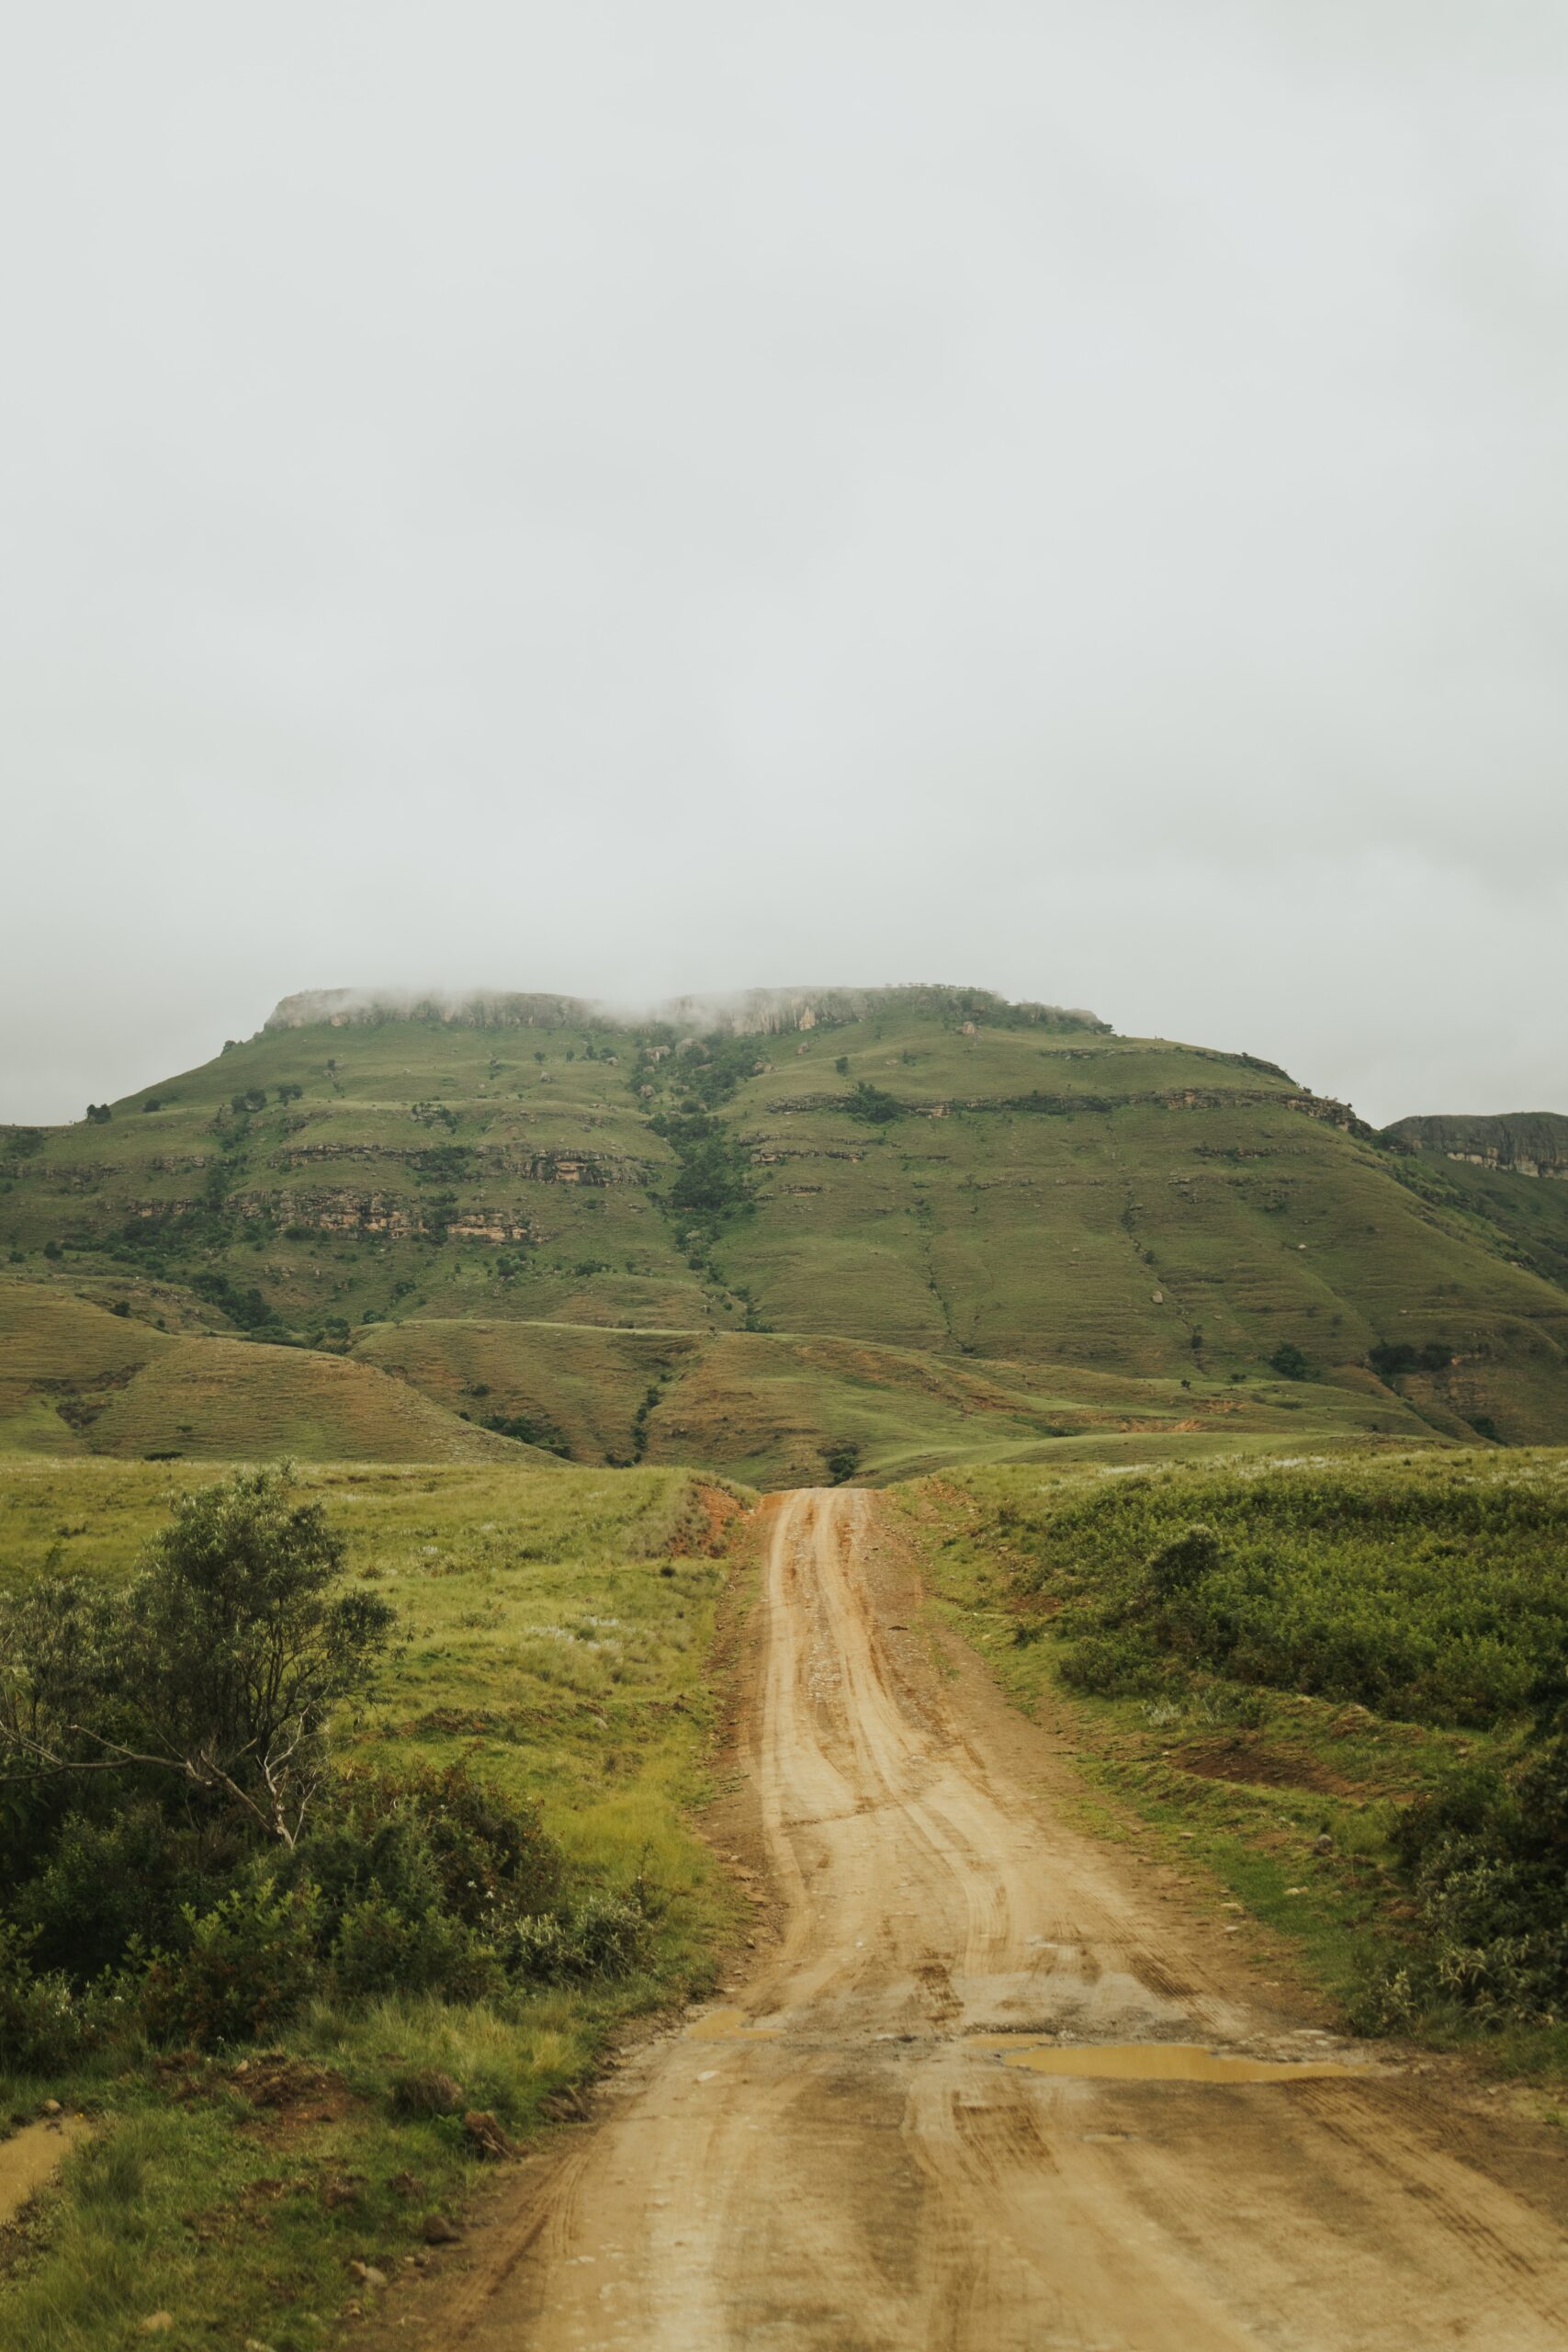 Drakensberg elopement destination in South Africa